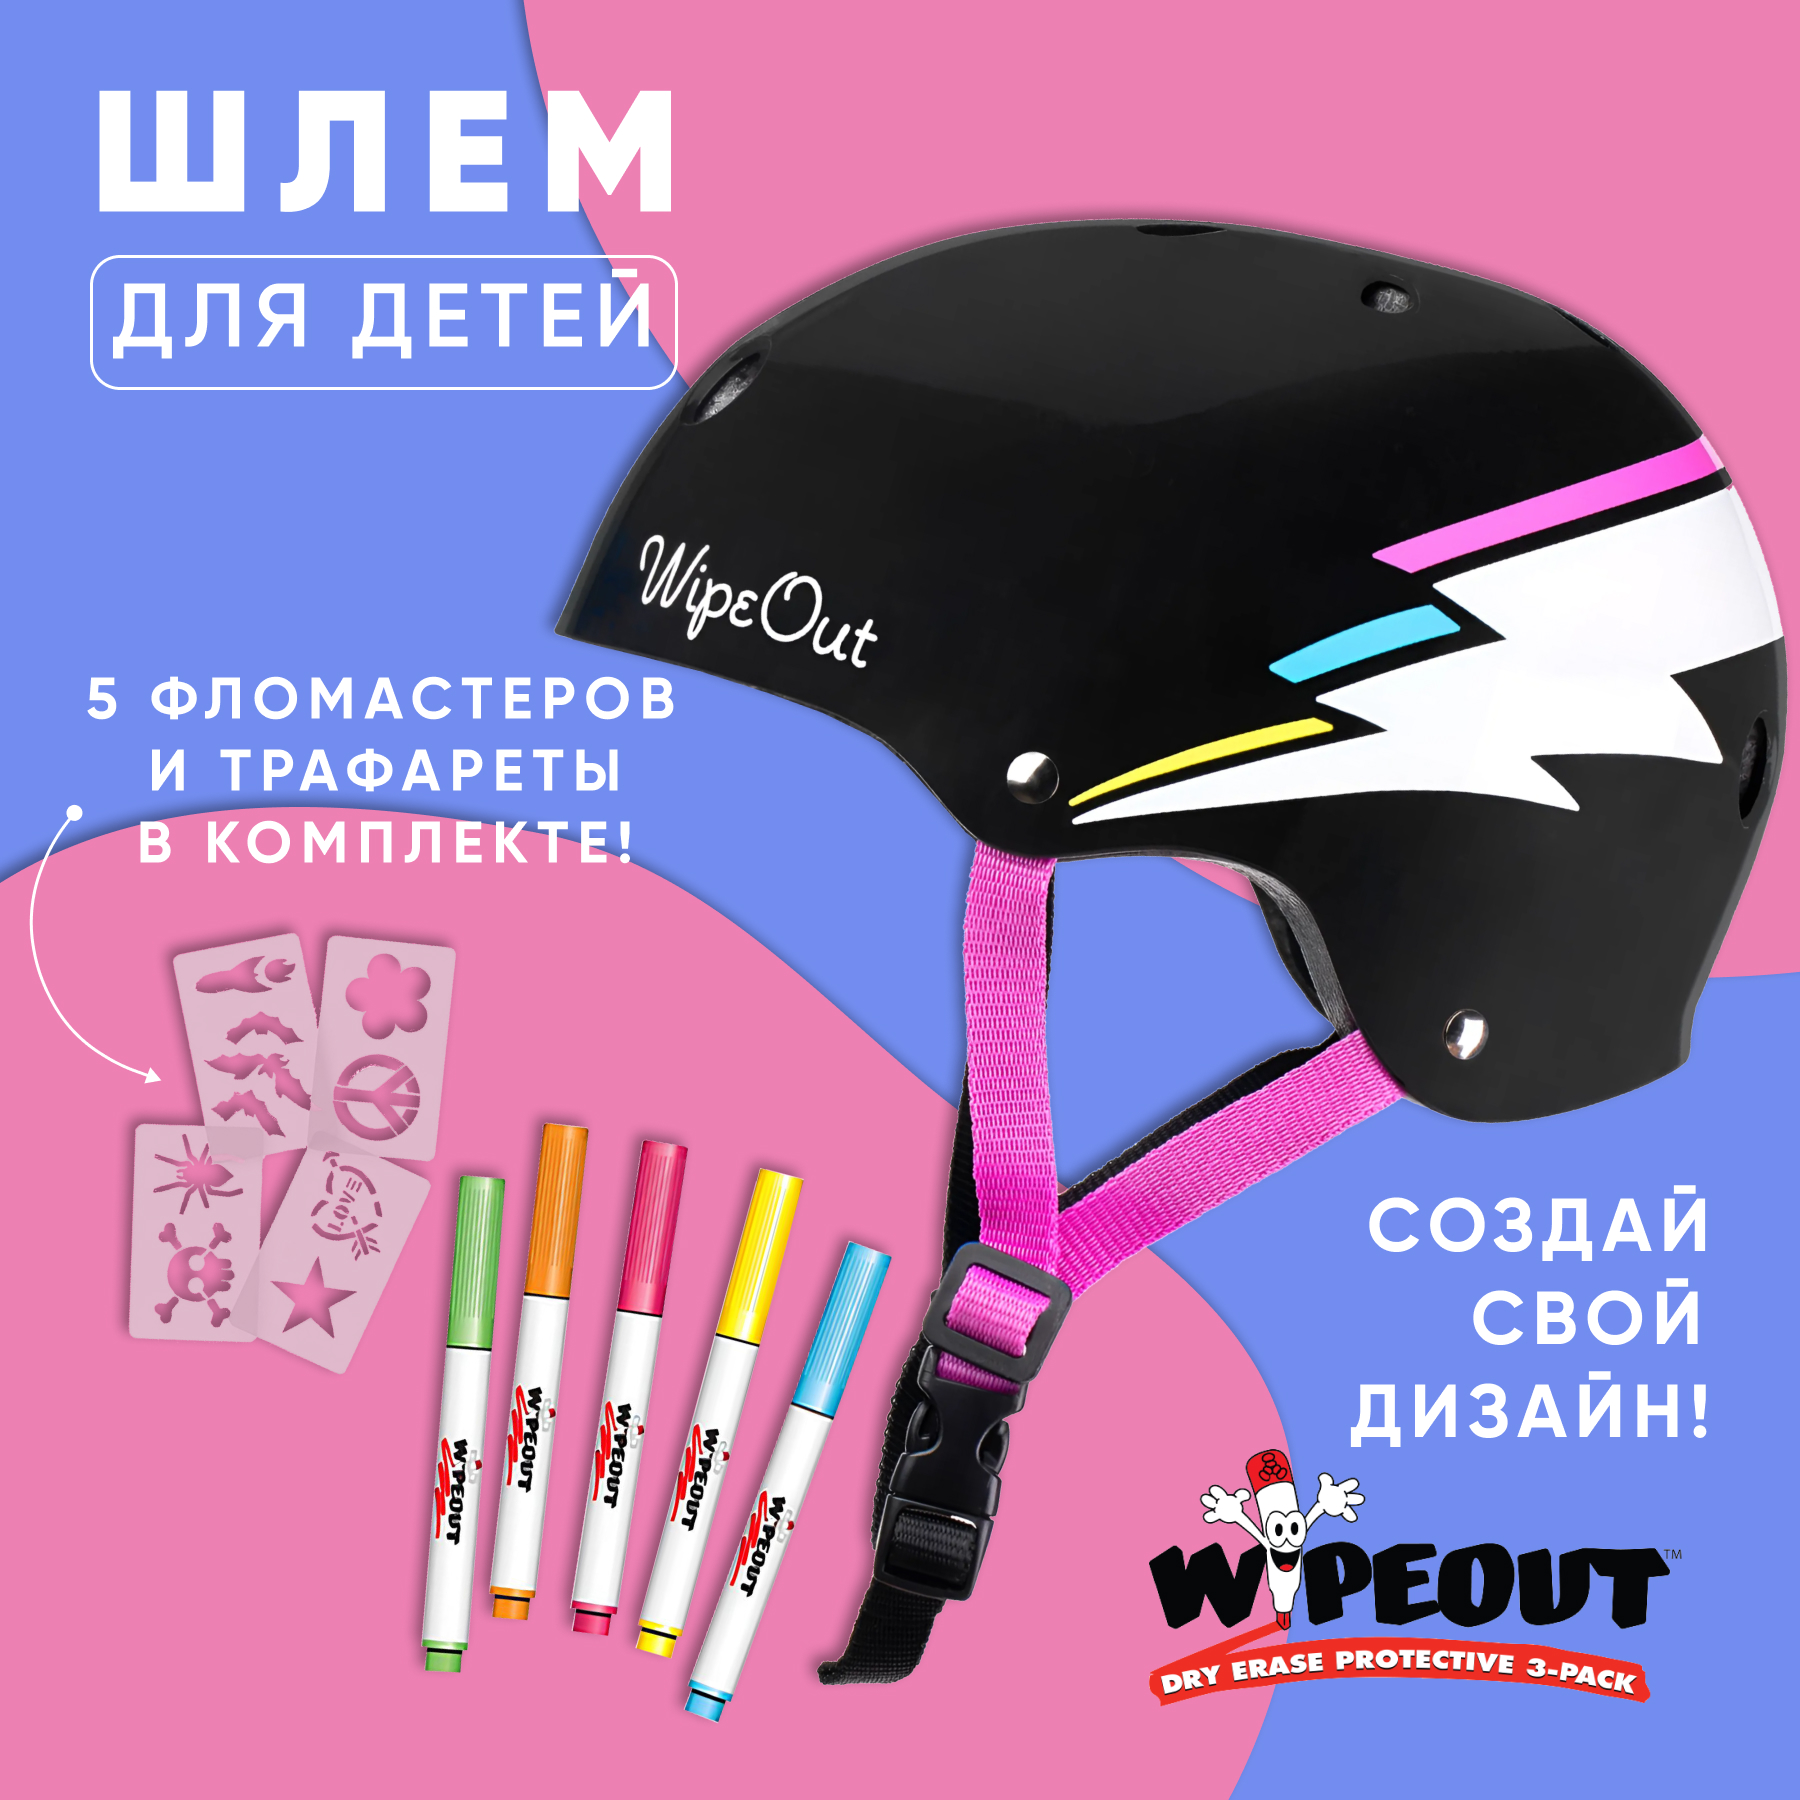 Шлем защитный спортивный WIPEOUT Black Bolt с фломастерами и трафаретами размер M 5+ обхват 49-52 см - фото 2